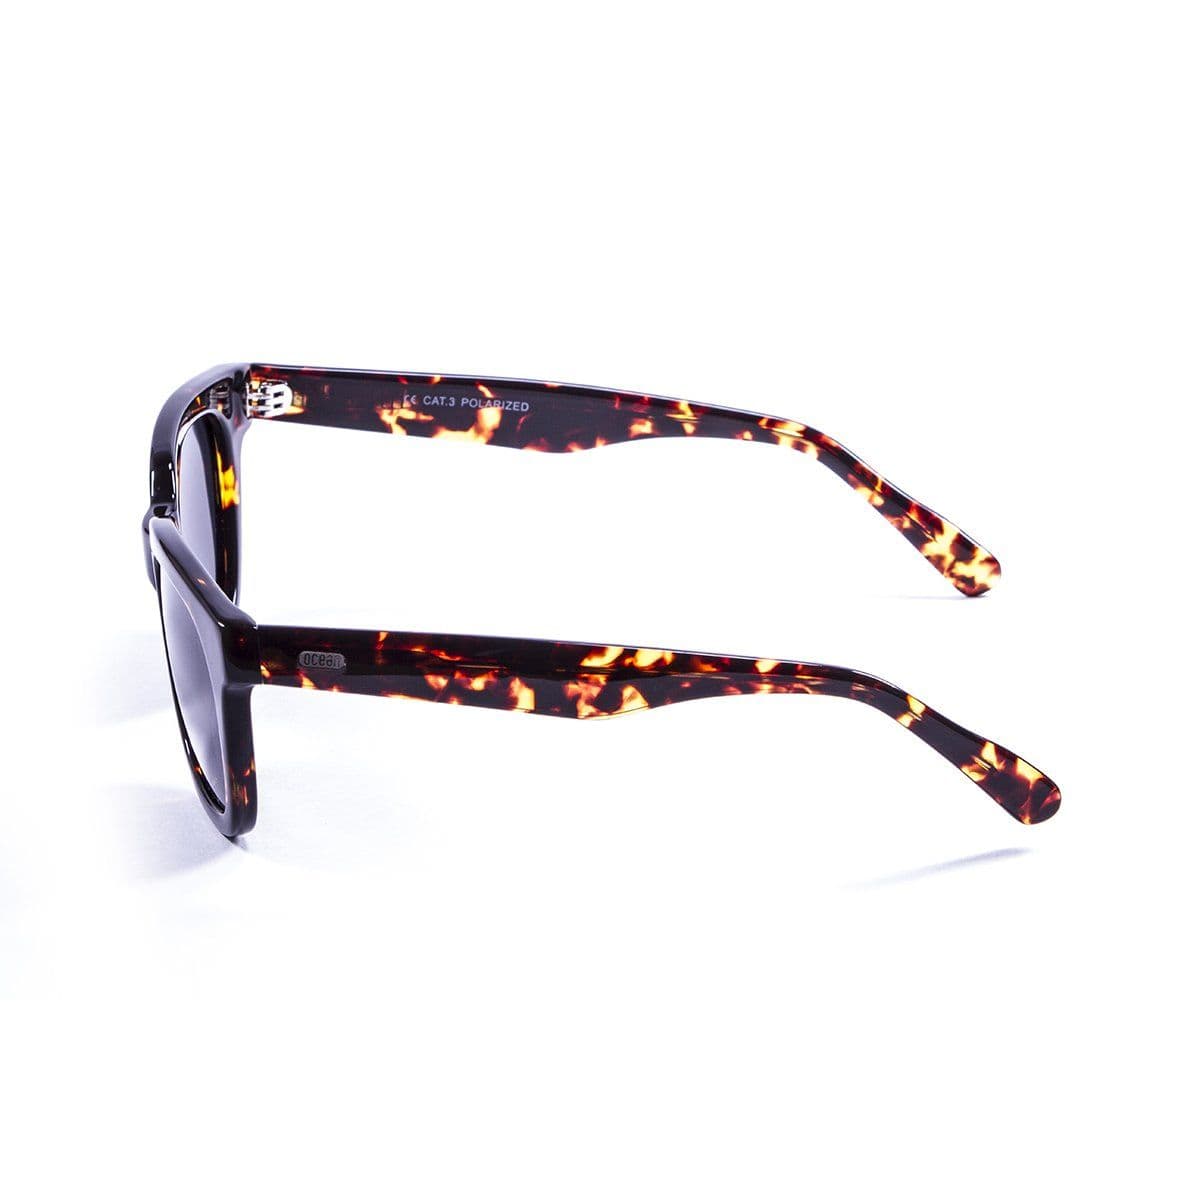 Ocean San Clemente Sunglasses